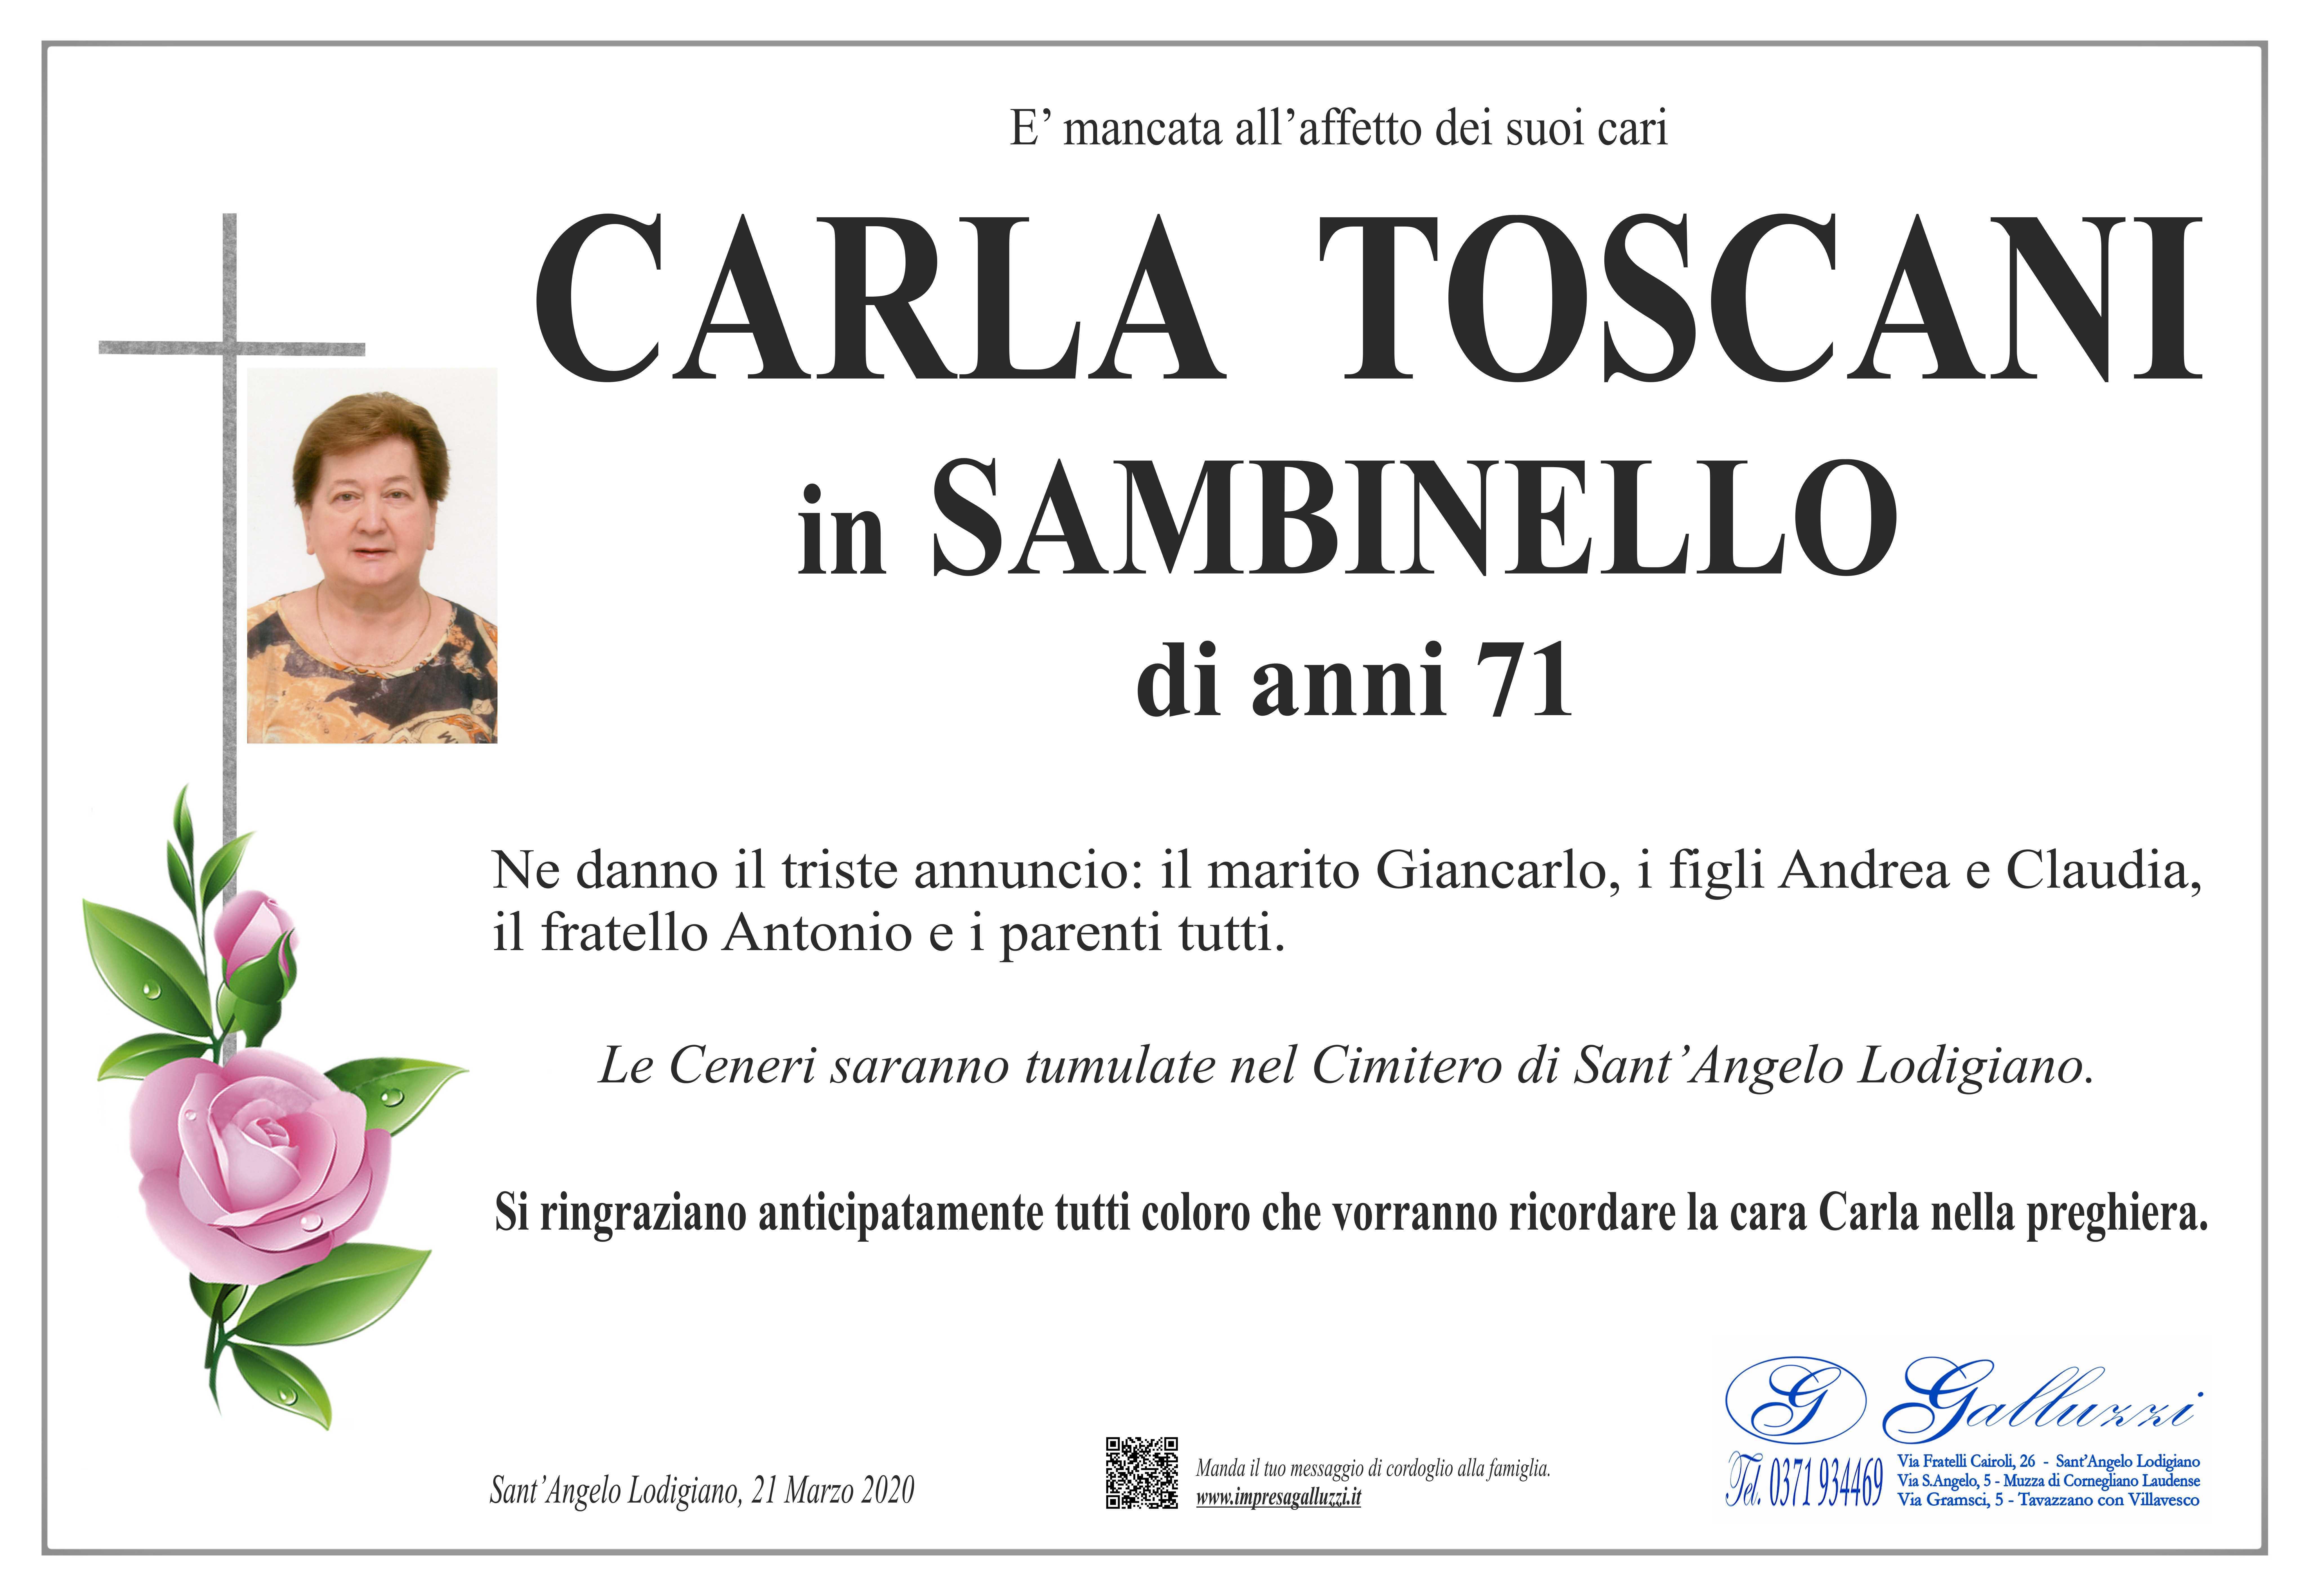 Carla Toscani